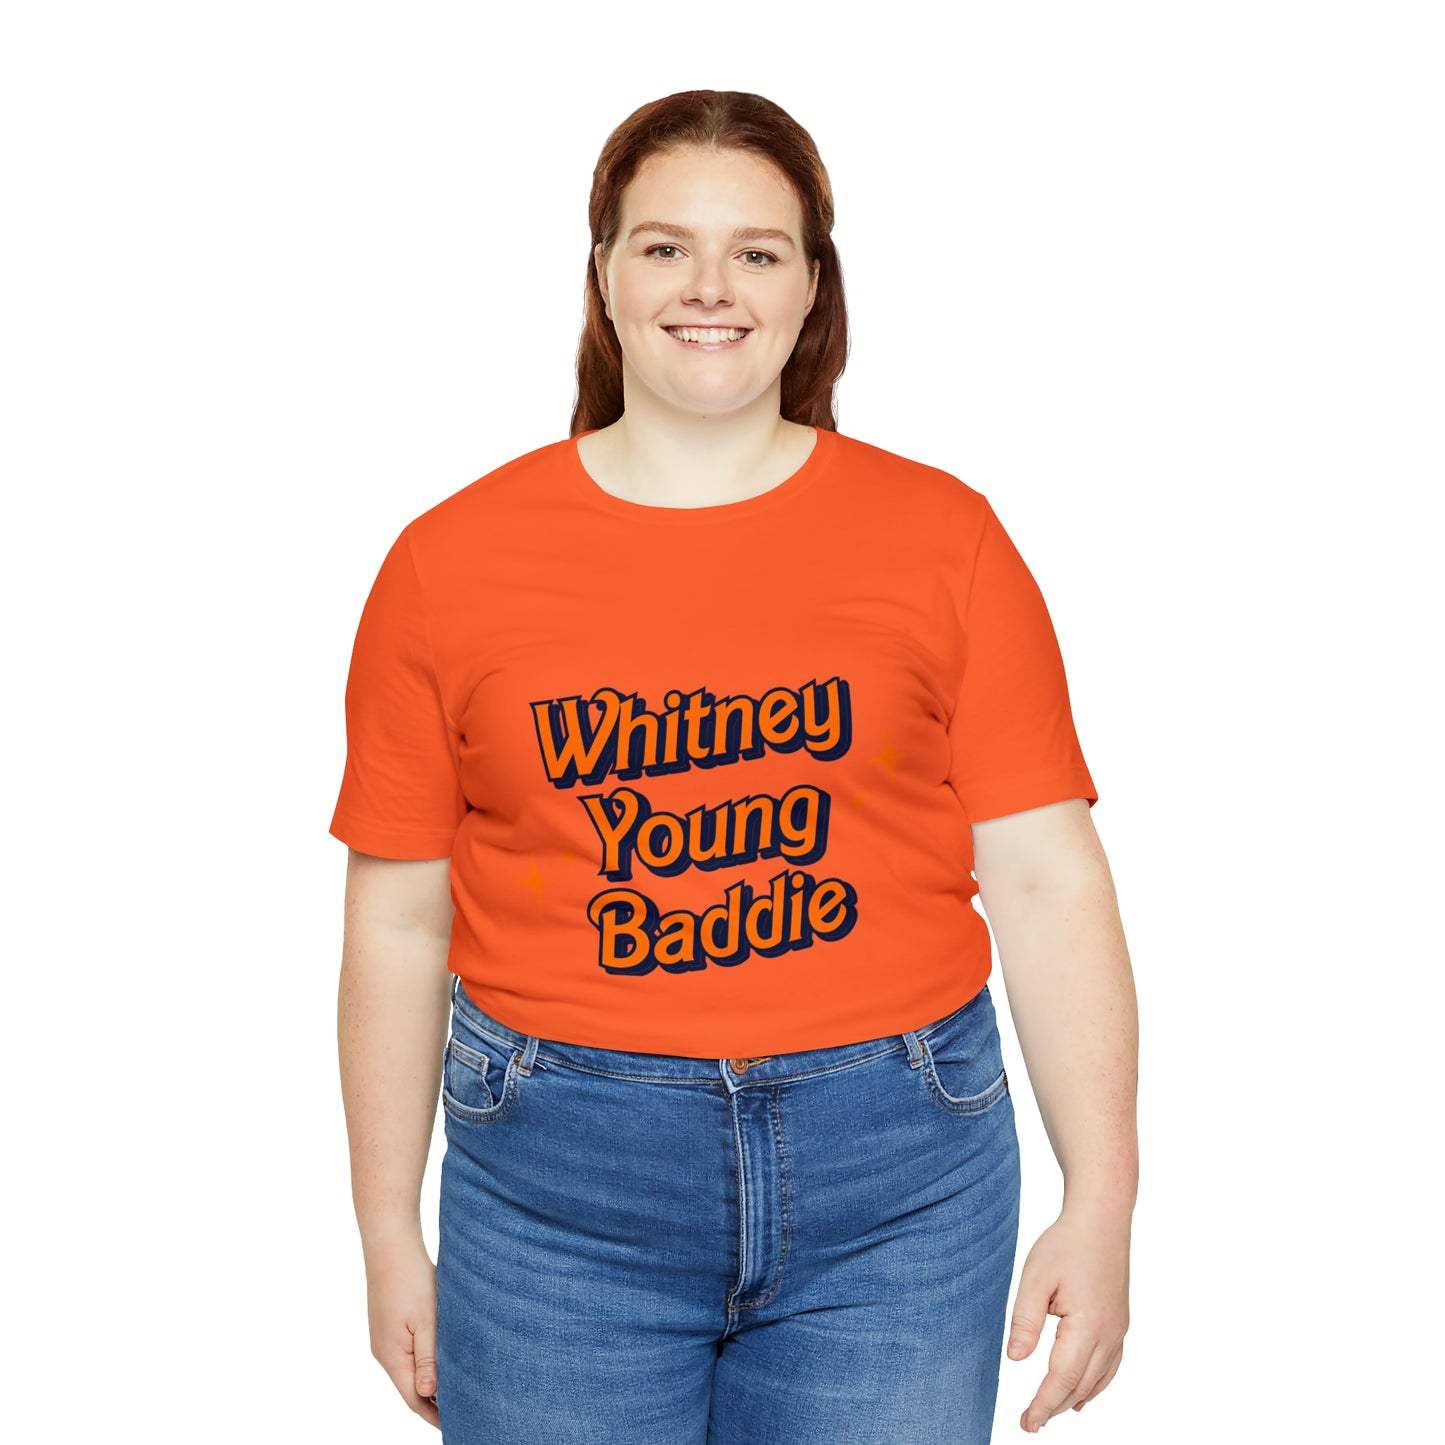 Whitney Young Baddie Shirt | Chicago Public Schools Shirt